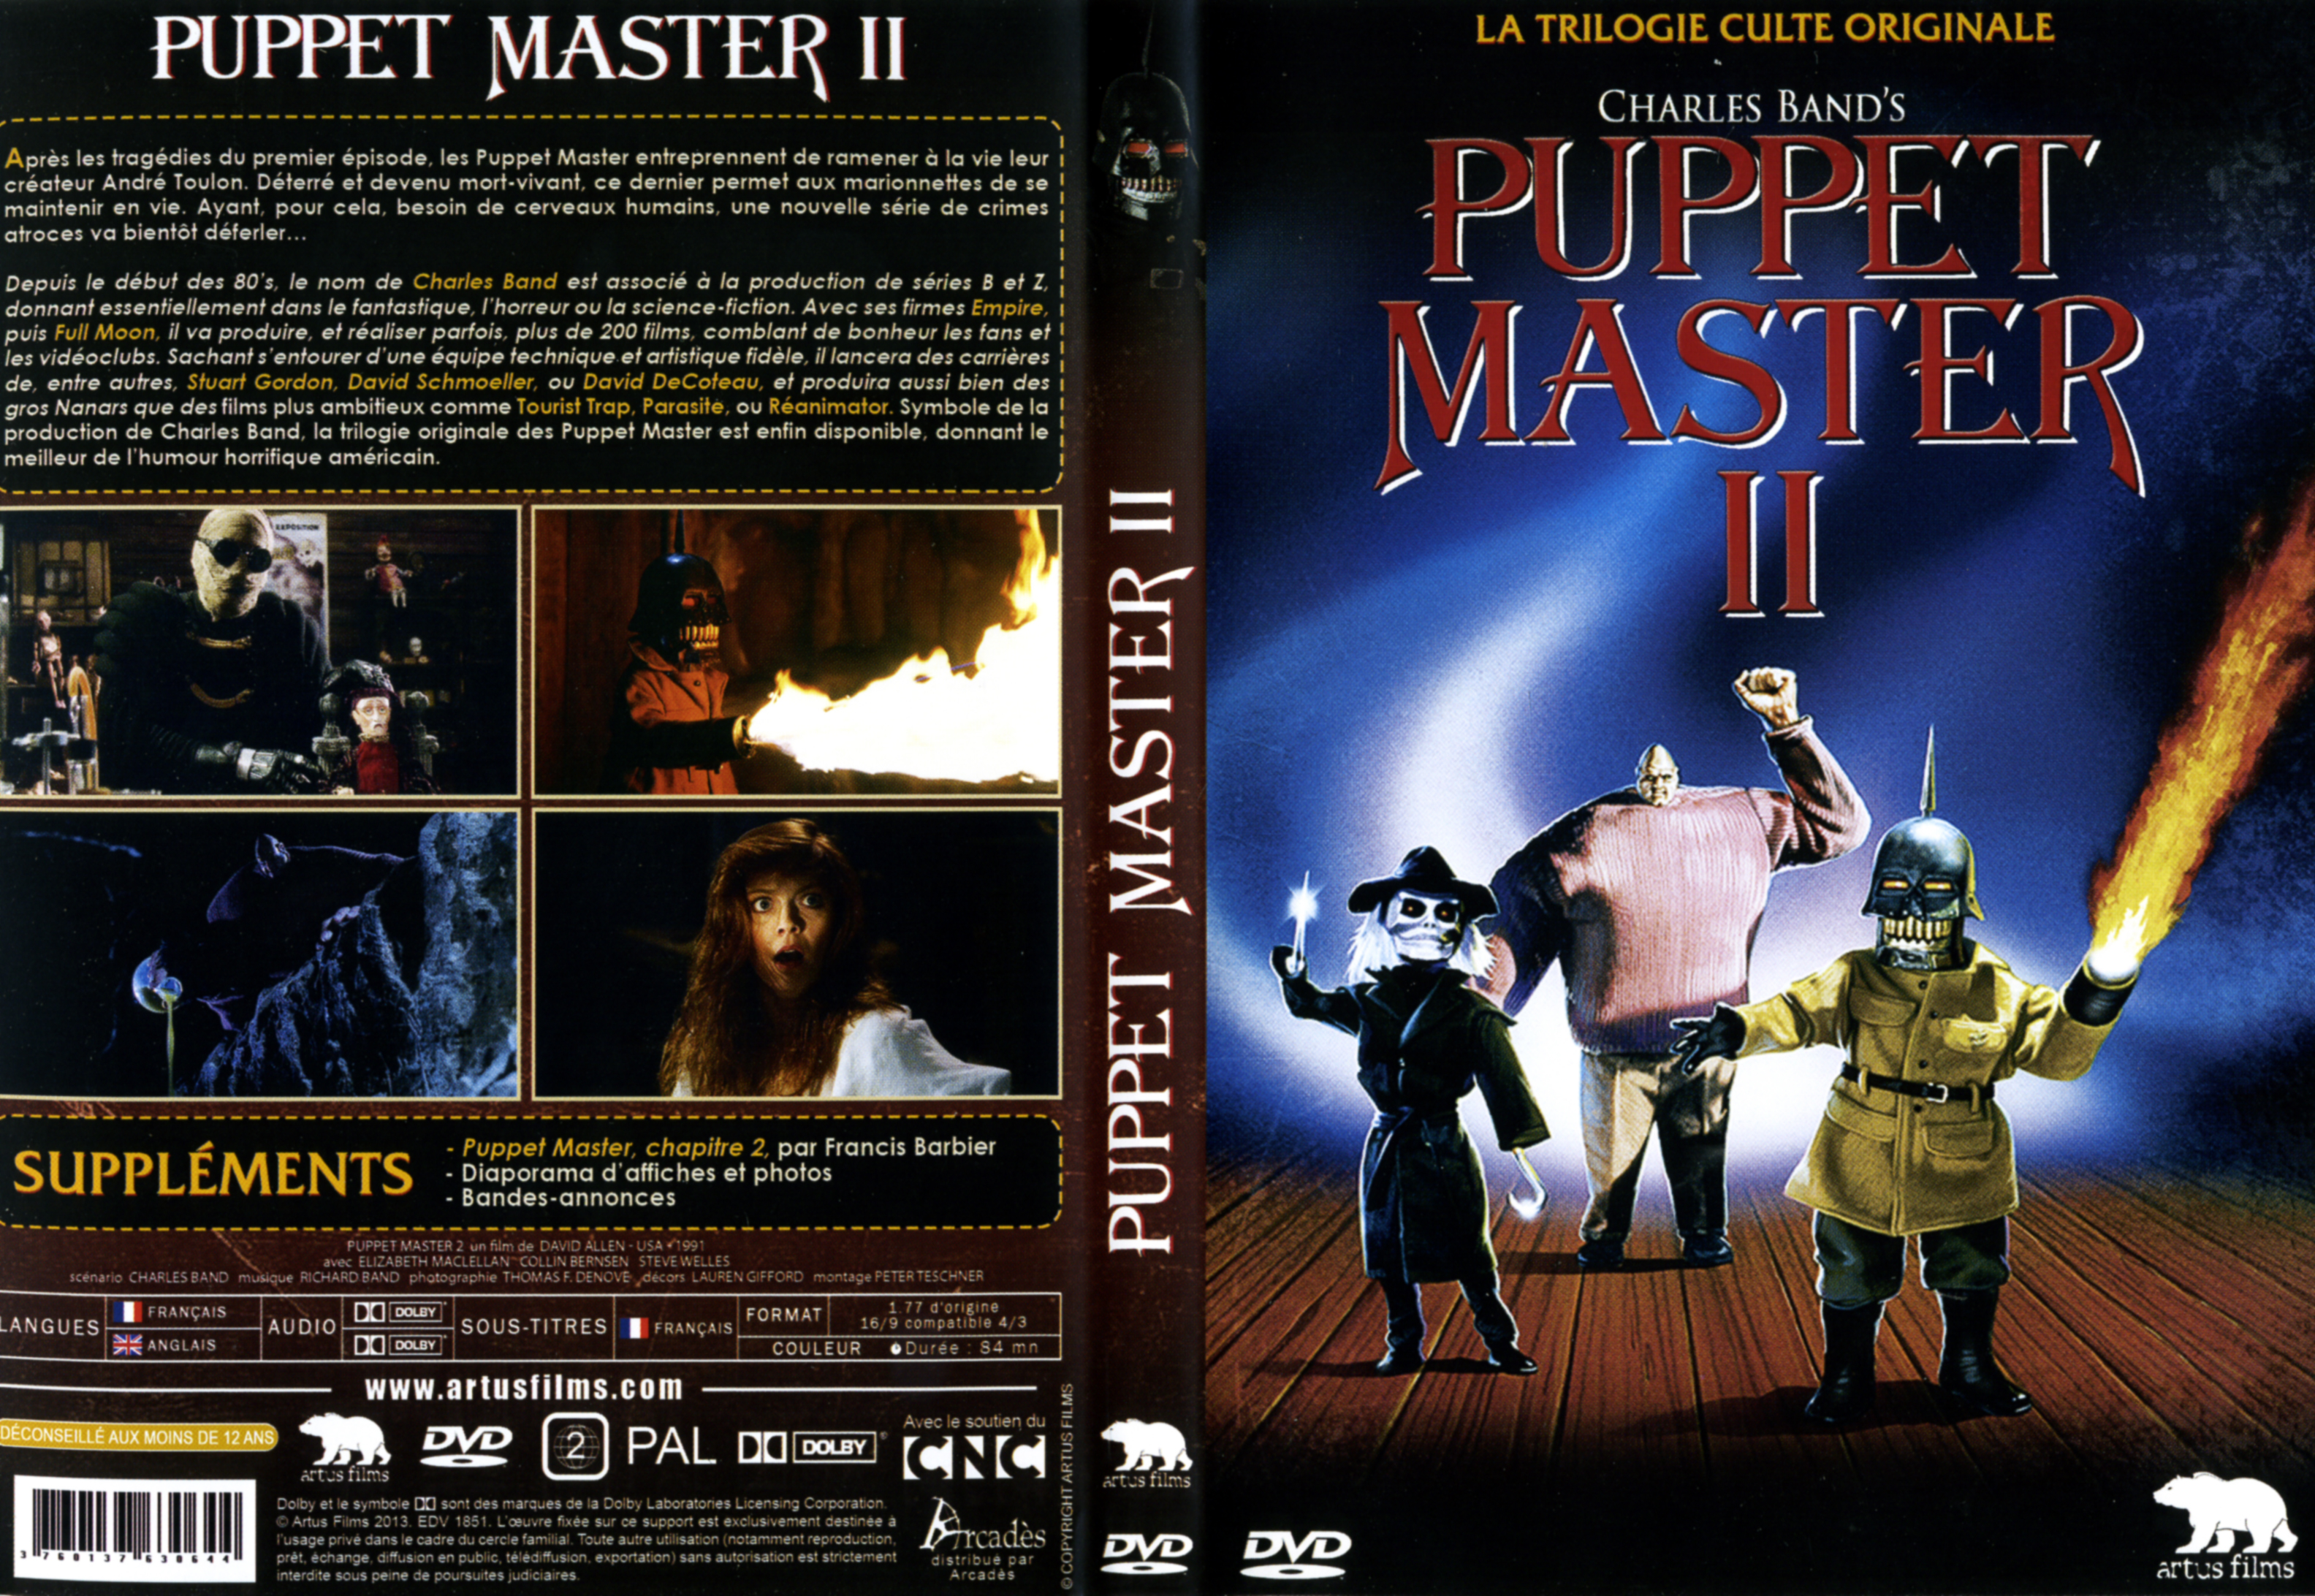 Jaquette DVD Puppet Master II